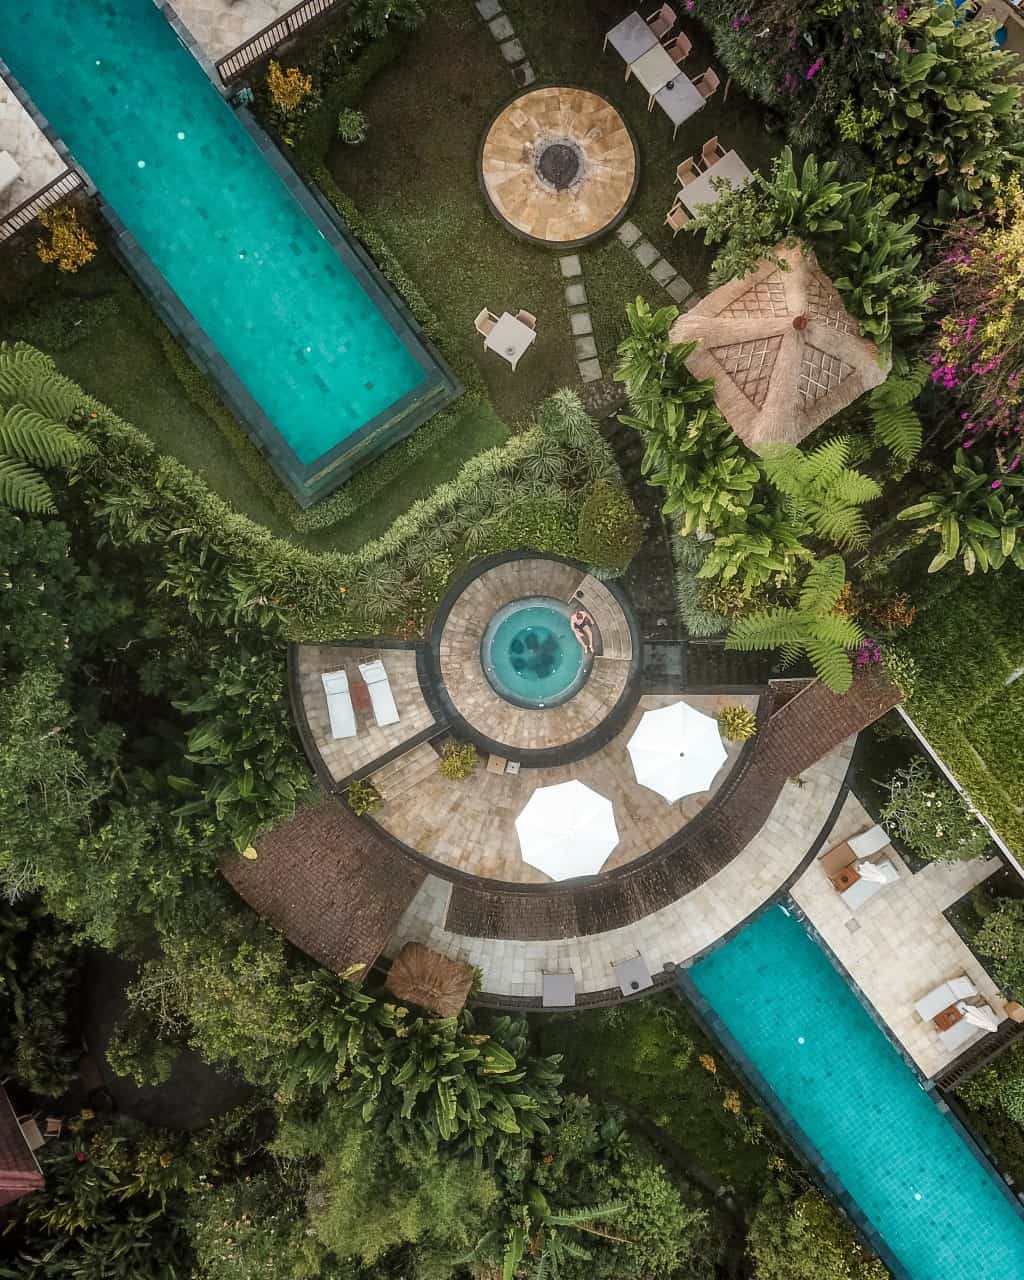 Munduk Moding Plantation Infinity Pools from above